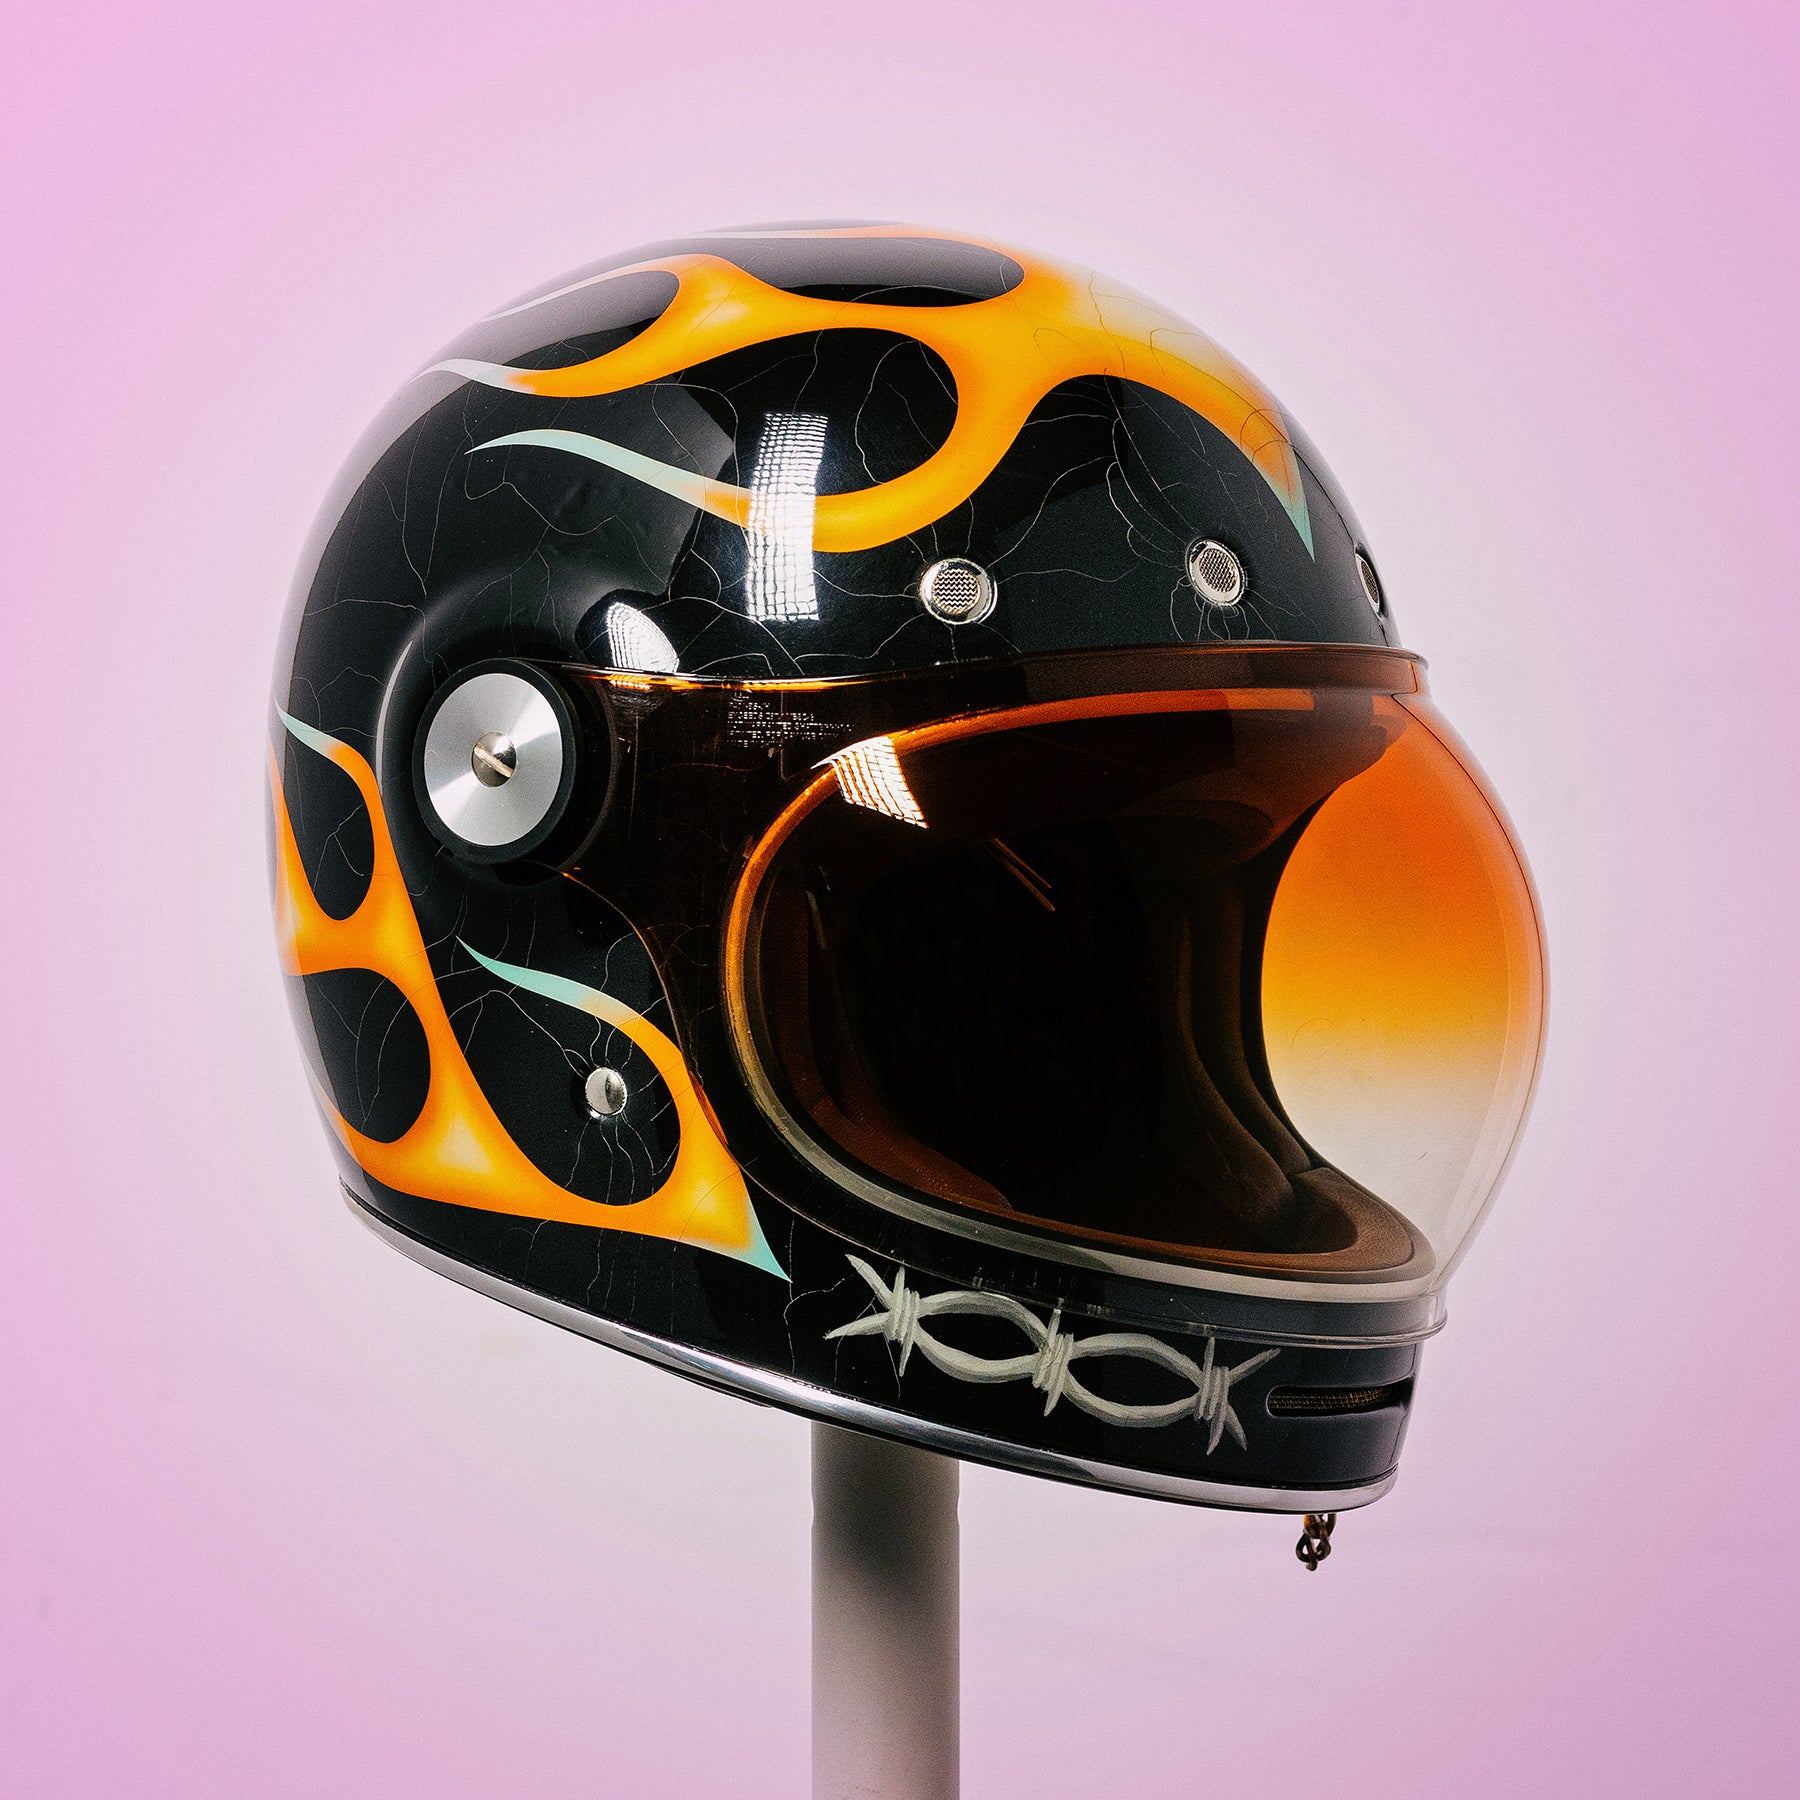 Trippy Ten helmet art show Pittsburgh Glory Daze motorcycle show Bell Helmets Mikey Favacchia